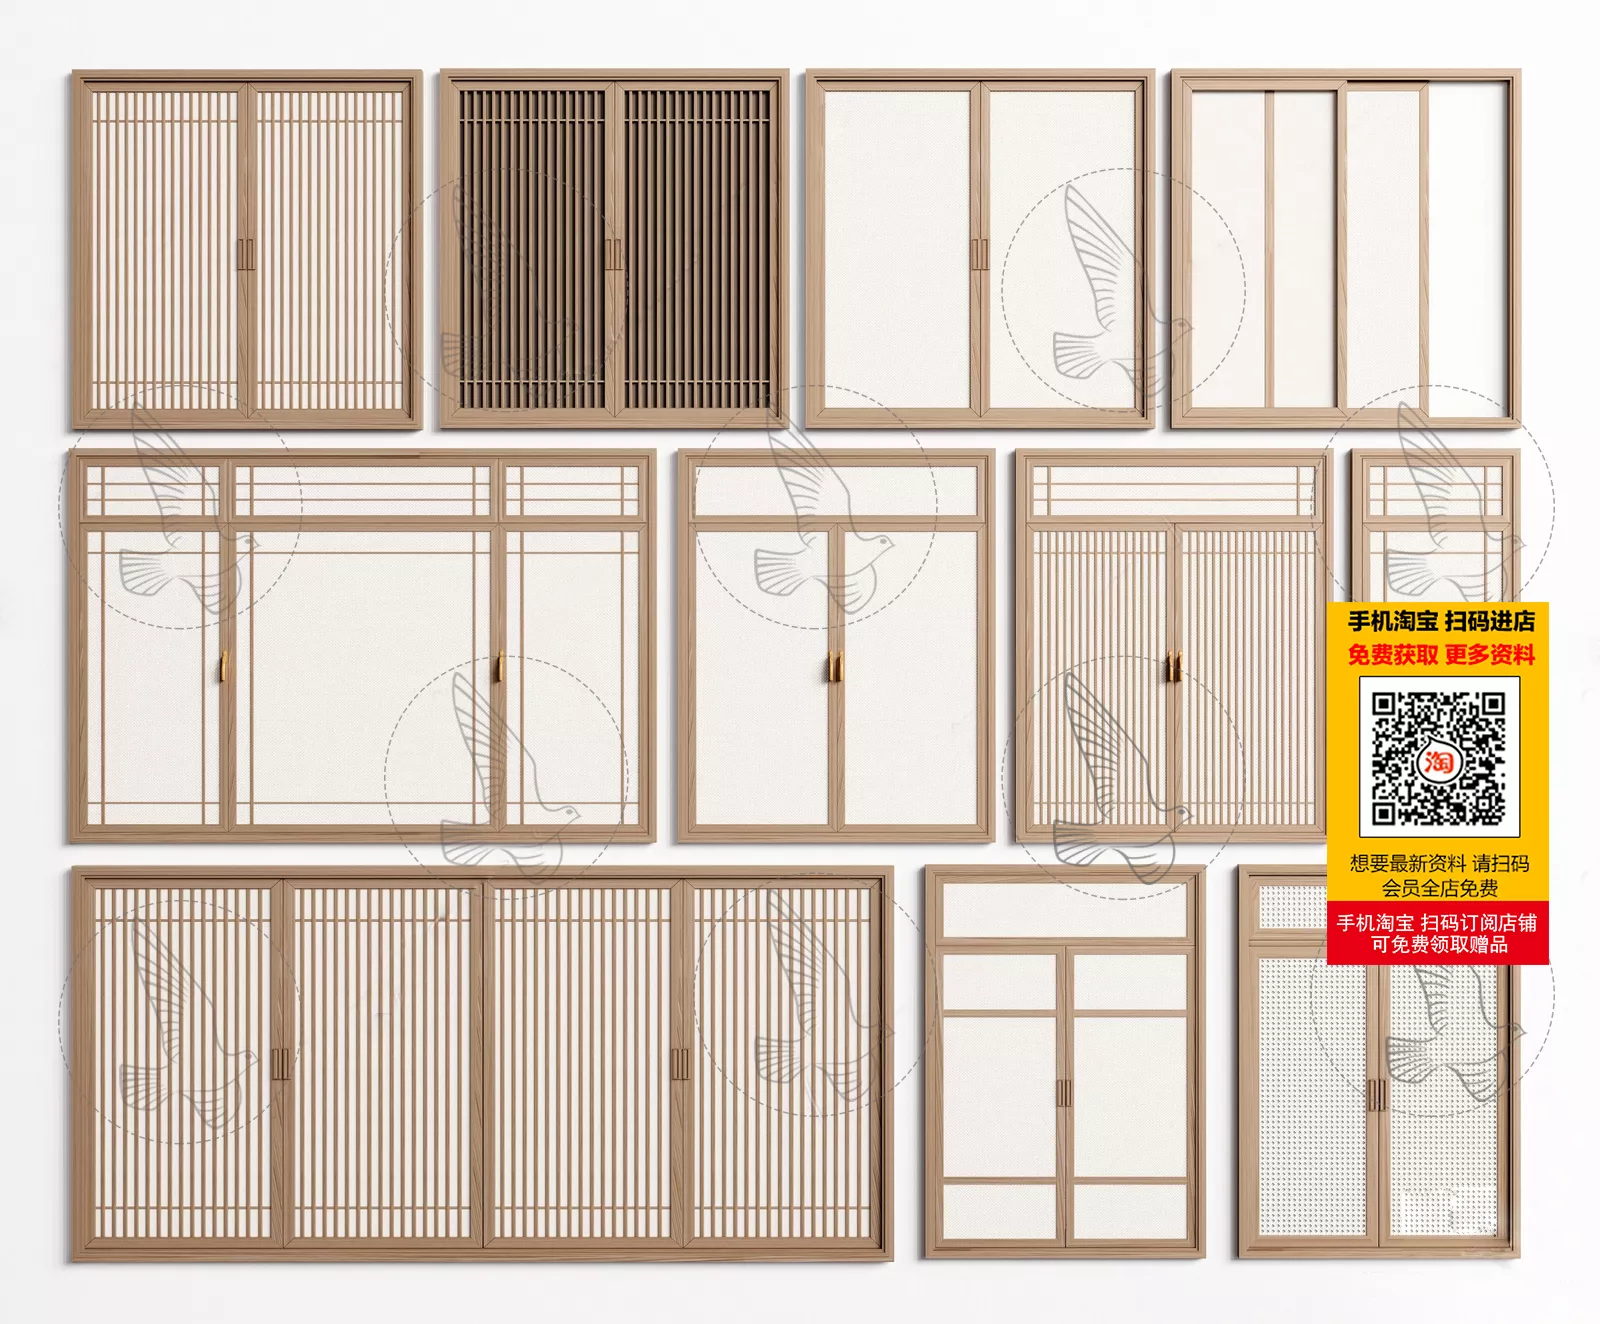 MODERN WINDOWS - SKETCHUP 3D MODEL - VRAY OR ENSCAPE - ID16690